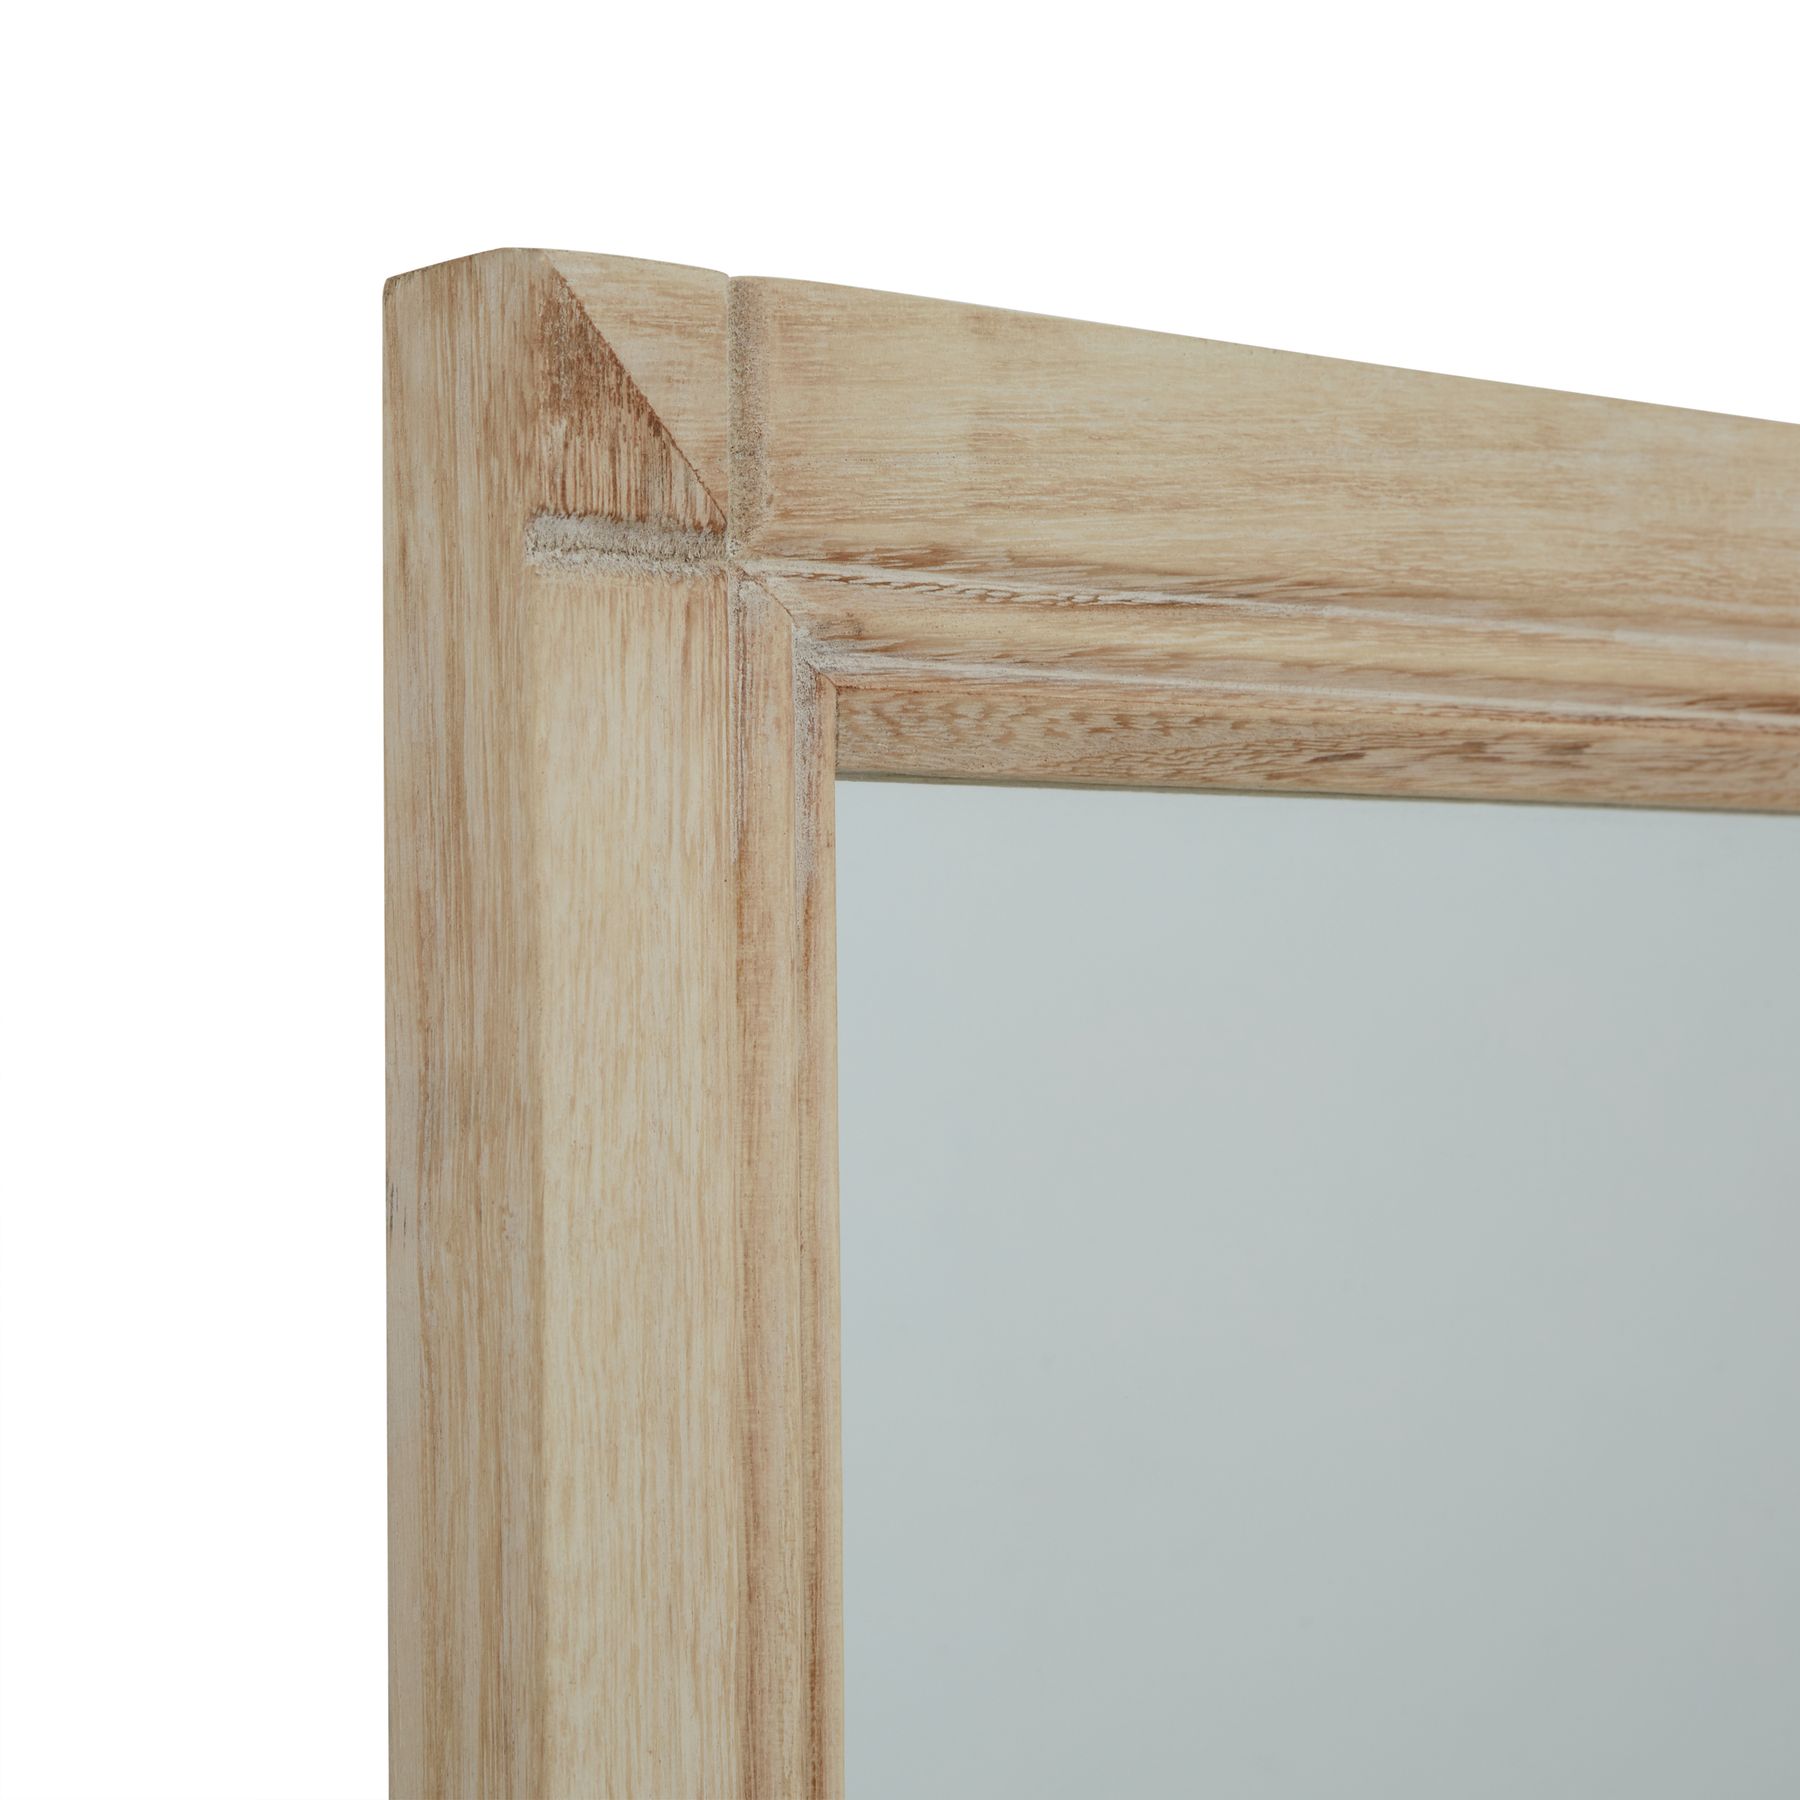 Washed Wood XL Window Mirror - Image 2